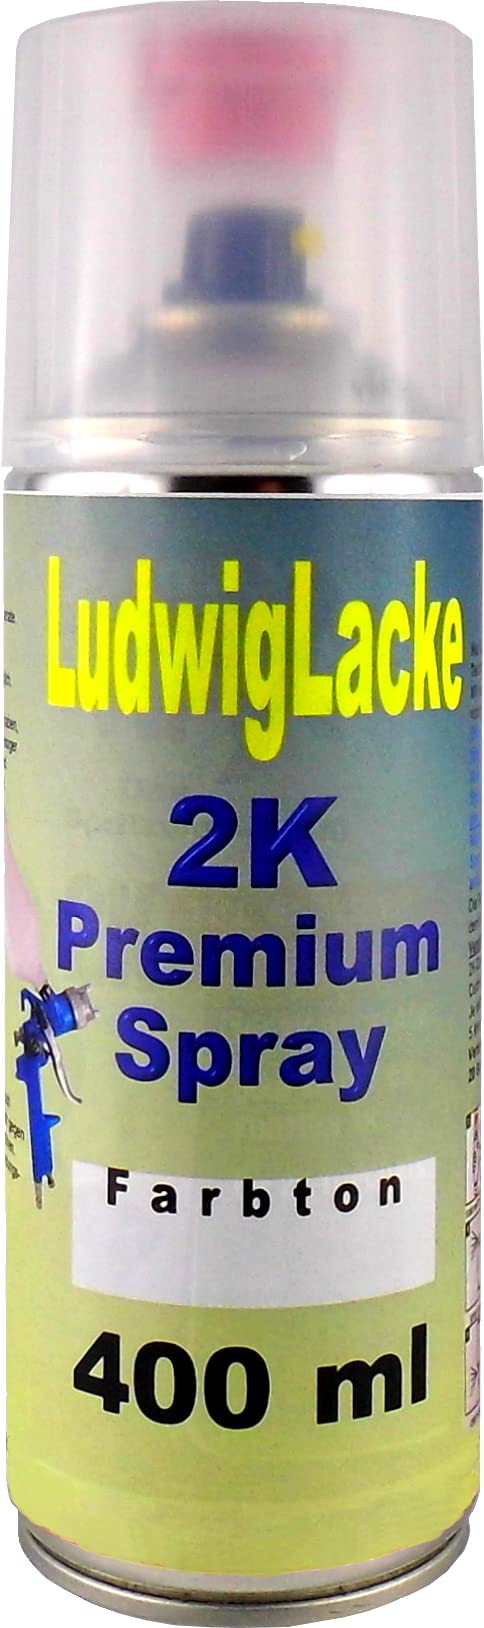 Ludwig Lacke RAL 9005 TIEFSCHWARZ 2K Premium Spray 400ml von Ludwiglacke